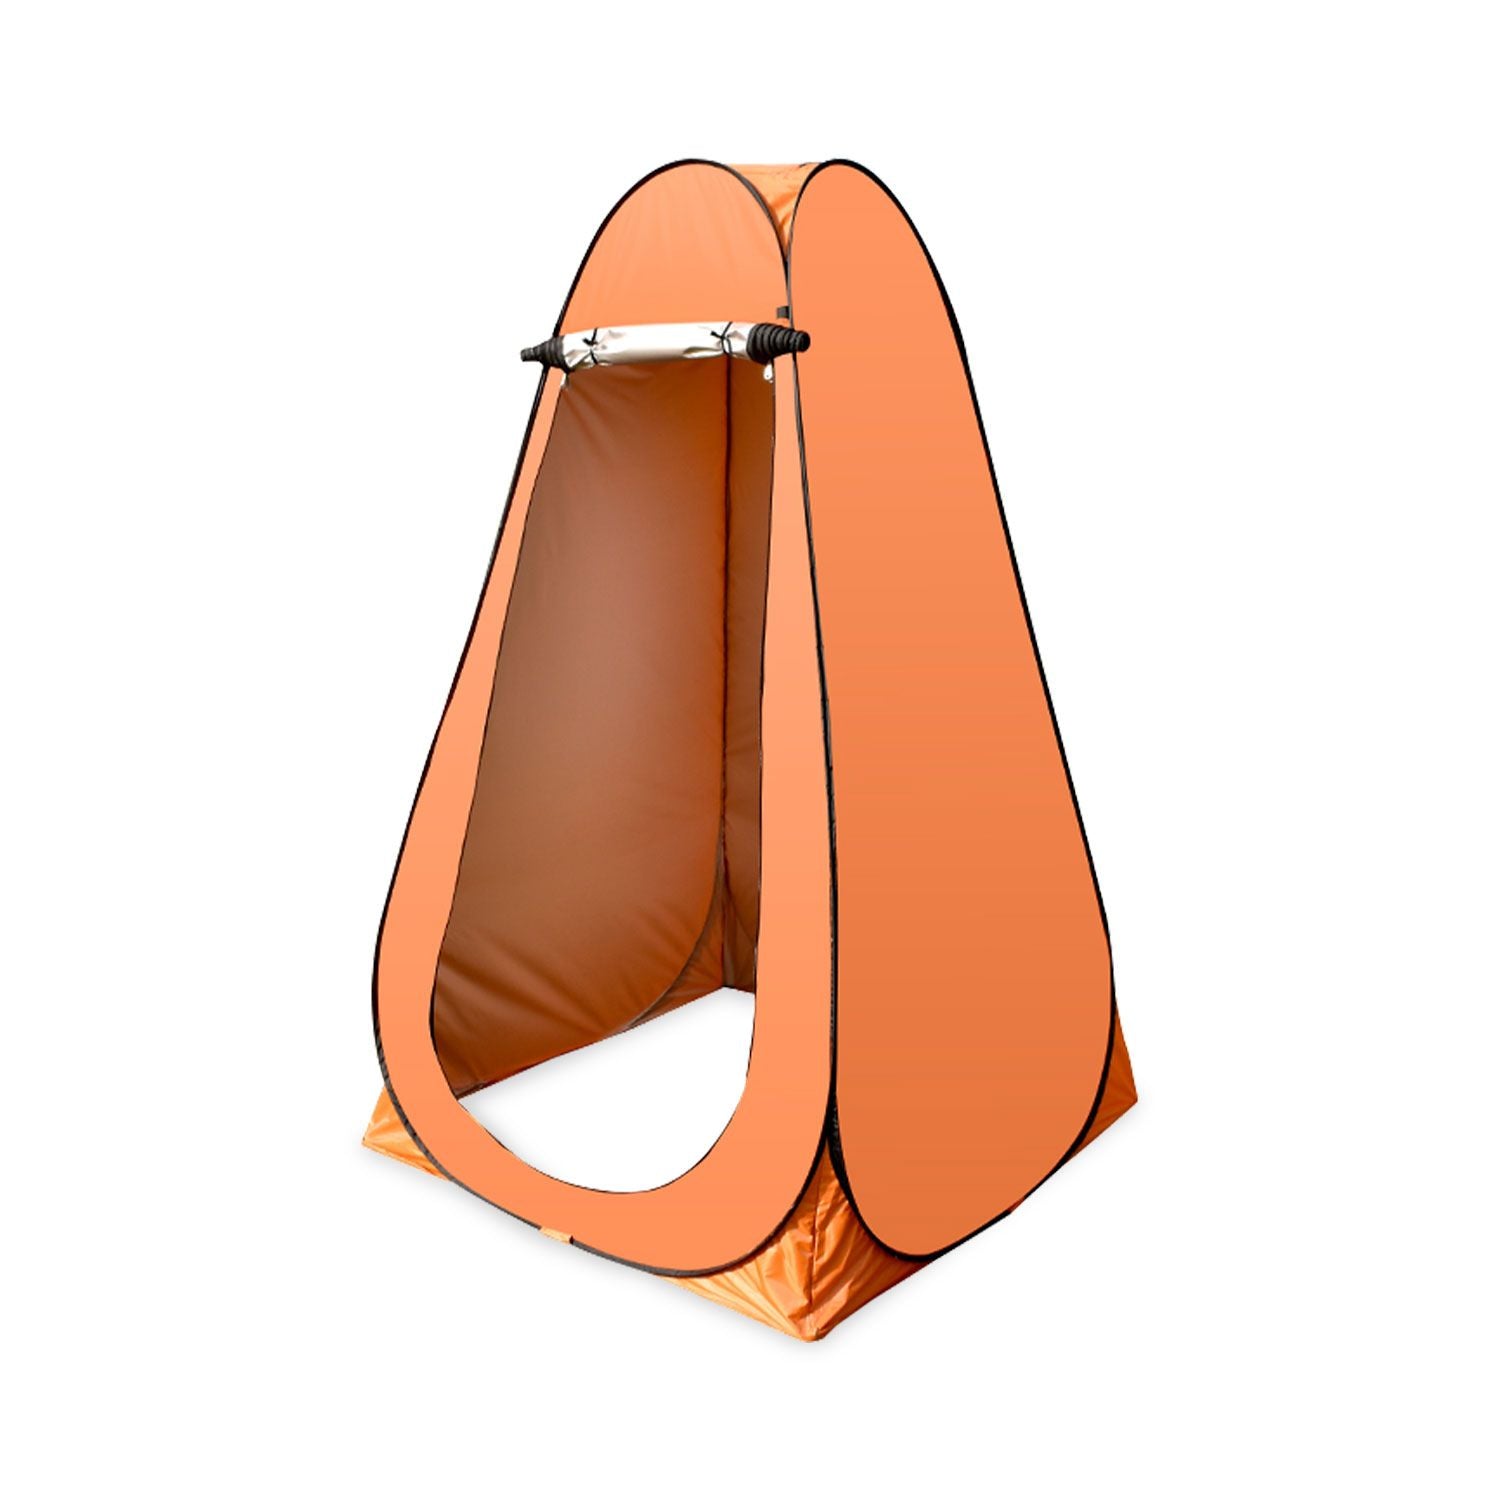 KILIROO Shower Tent with 2 Window (Orange) - SILBERSHELL